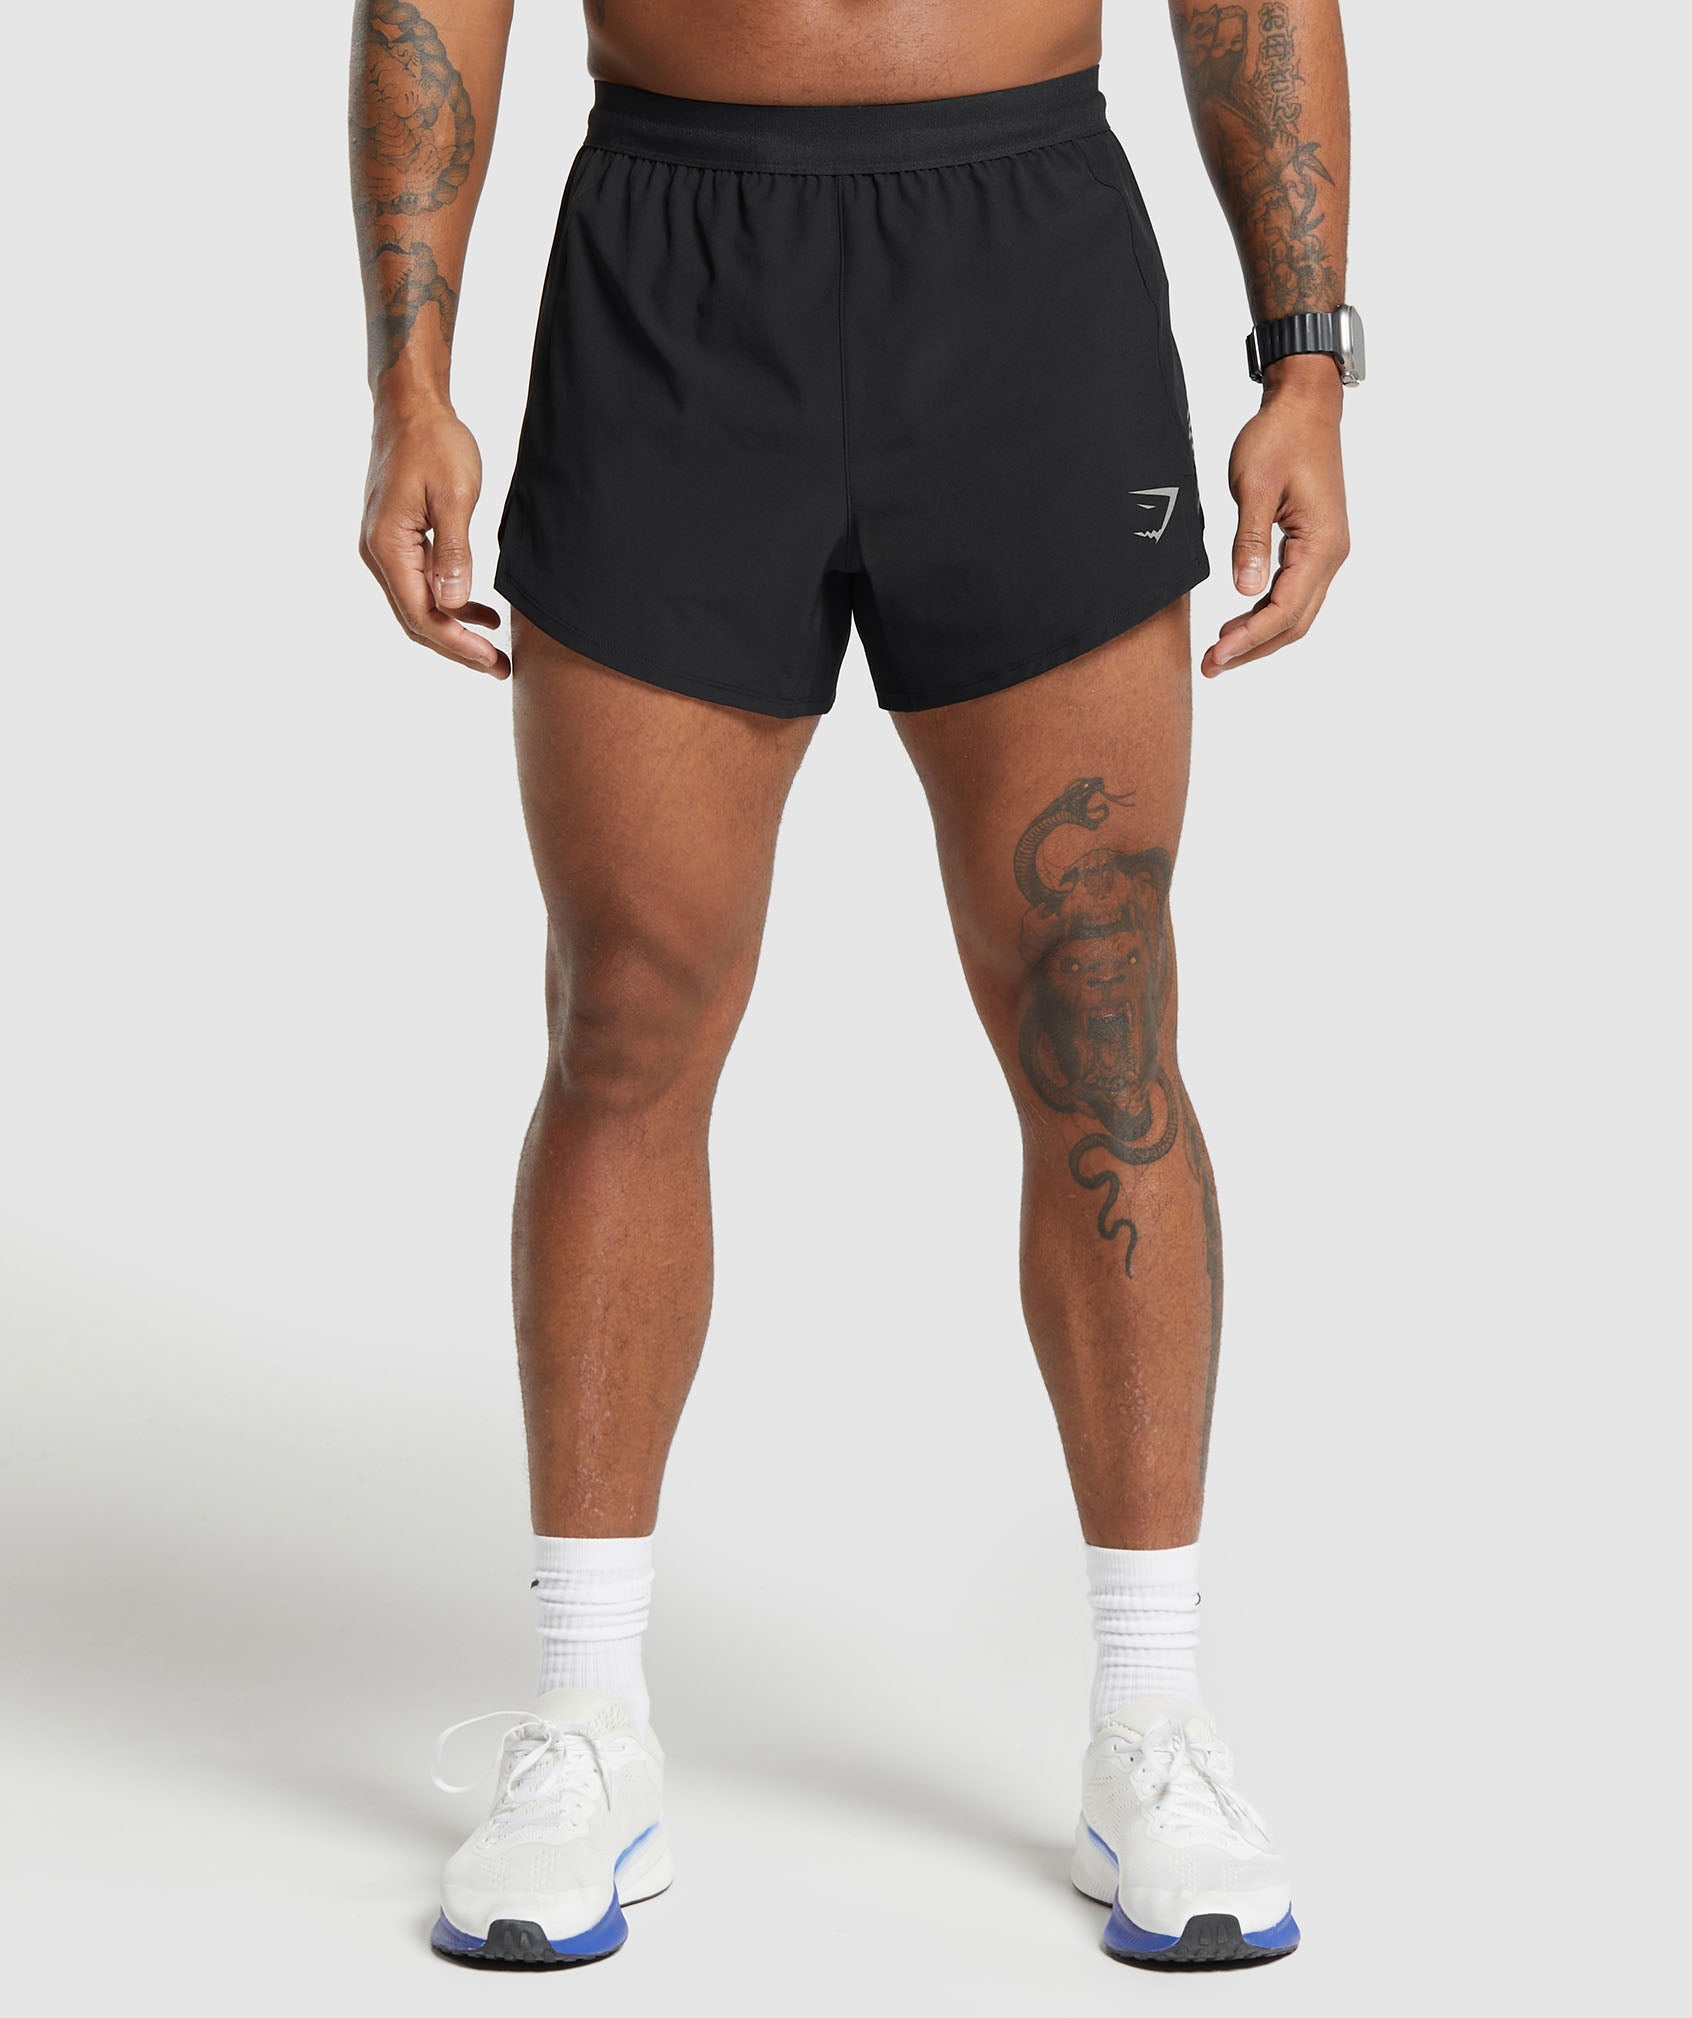 Apex Run 5" Shorts in Black